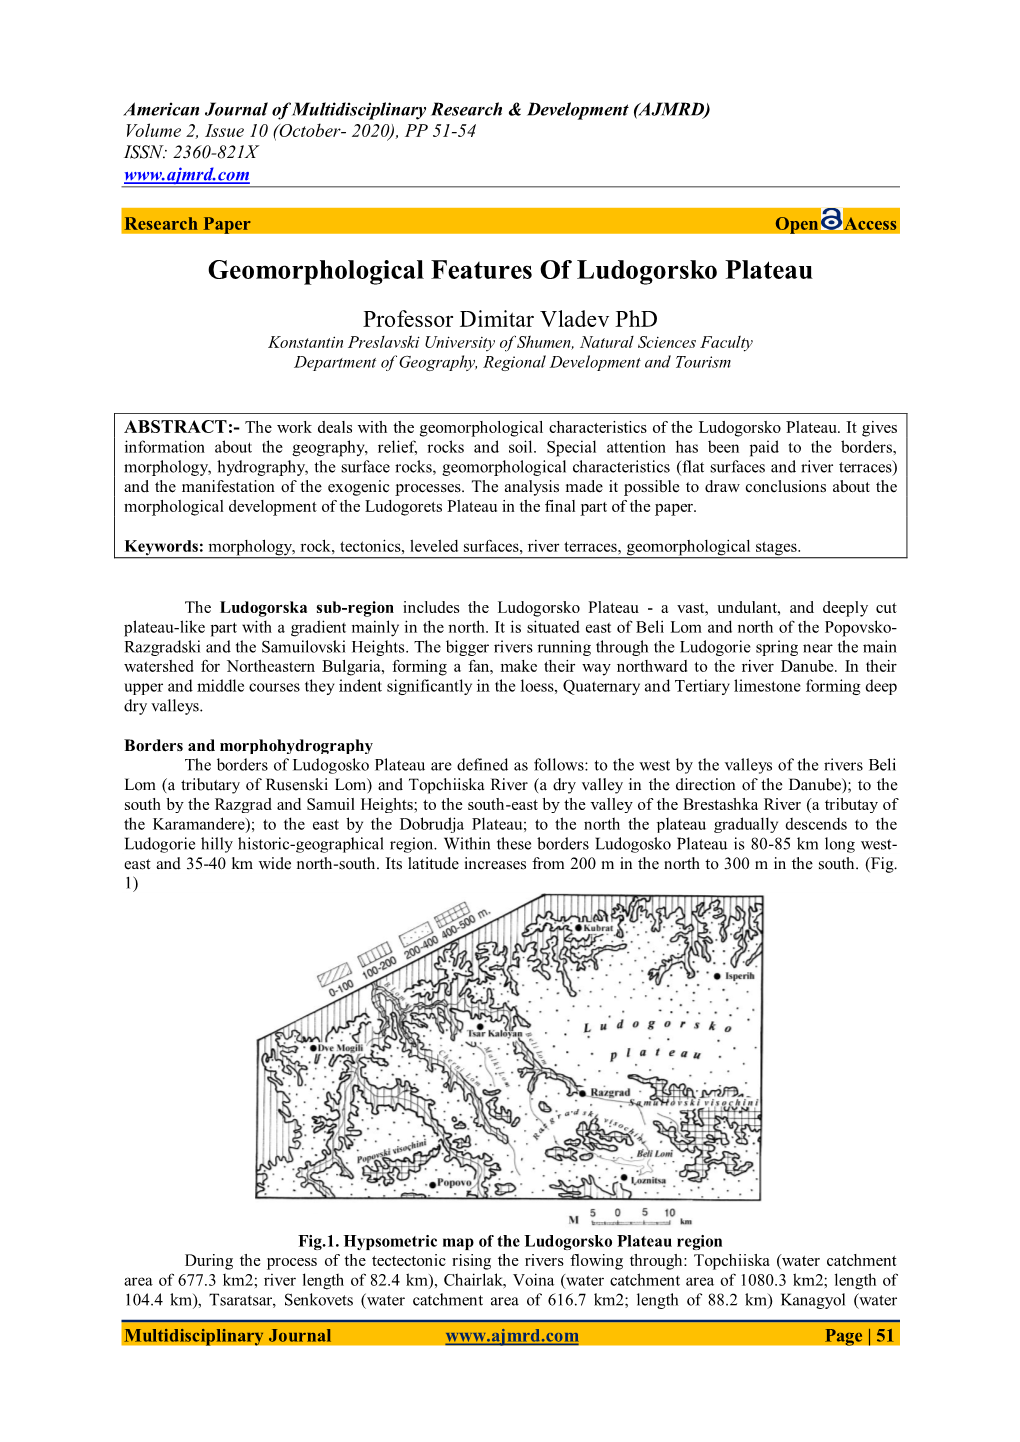 Geomorphological Features of Ludogorsko Plateau